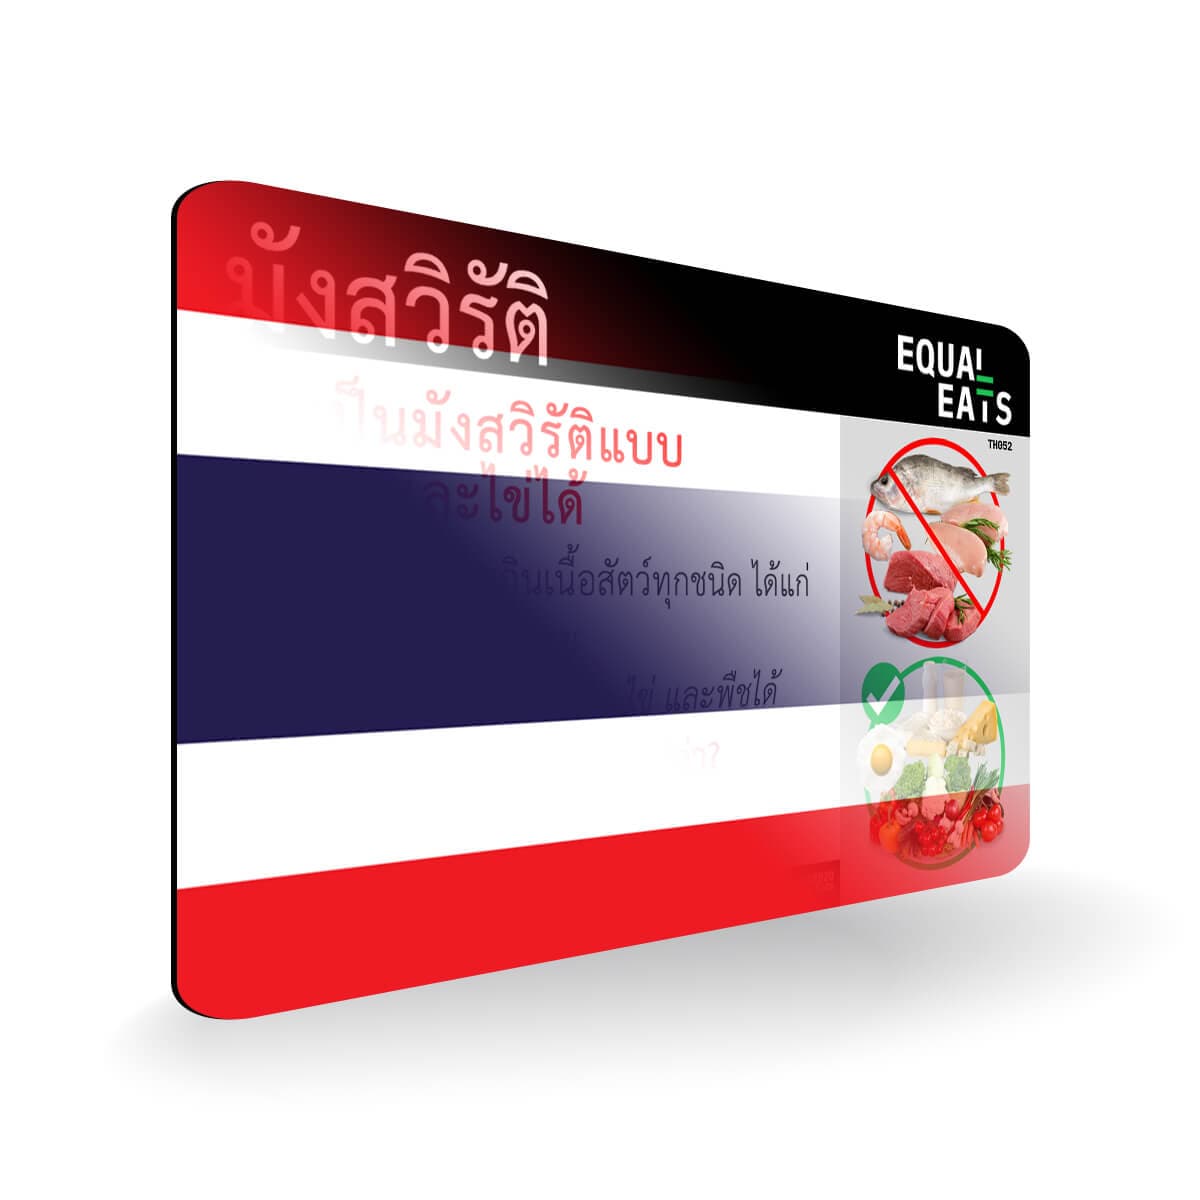 Lacto Ovo Vegetarian Diet in Thai. Vegetarian Card for Thailand